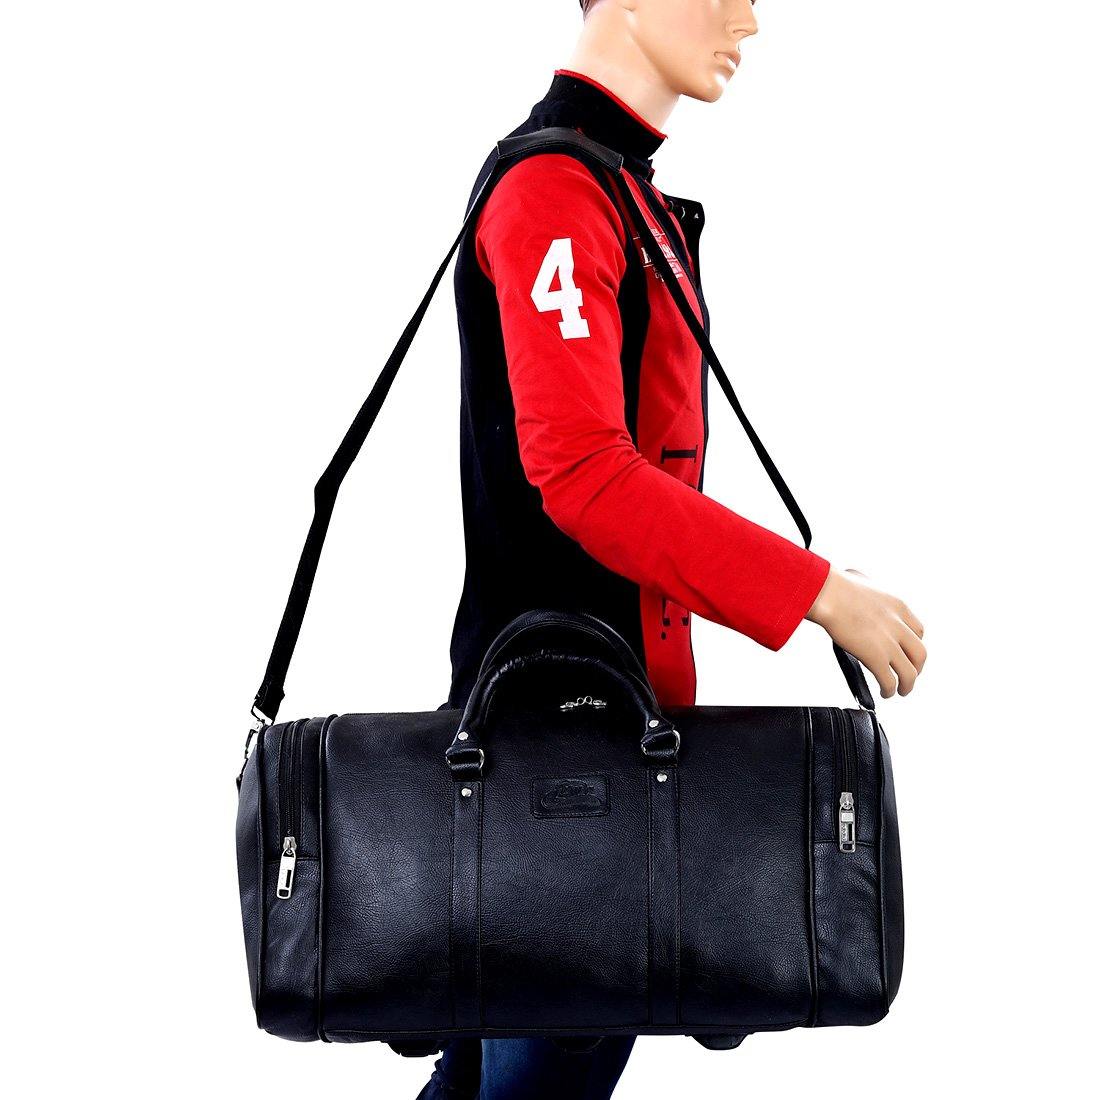 Leather World- Luxurious PU Leather Travel Duffel Bag/ Cabin Bag/ Gym Bag –